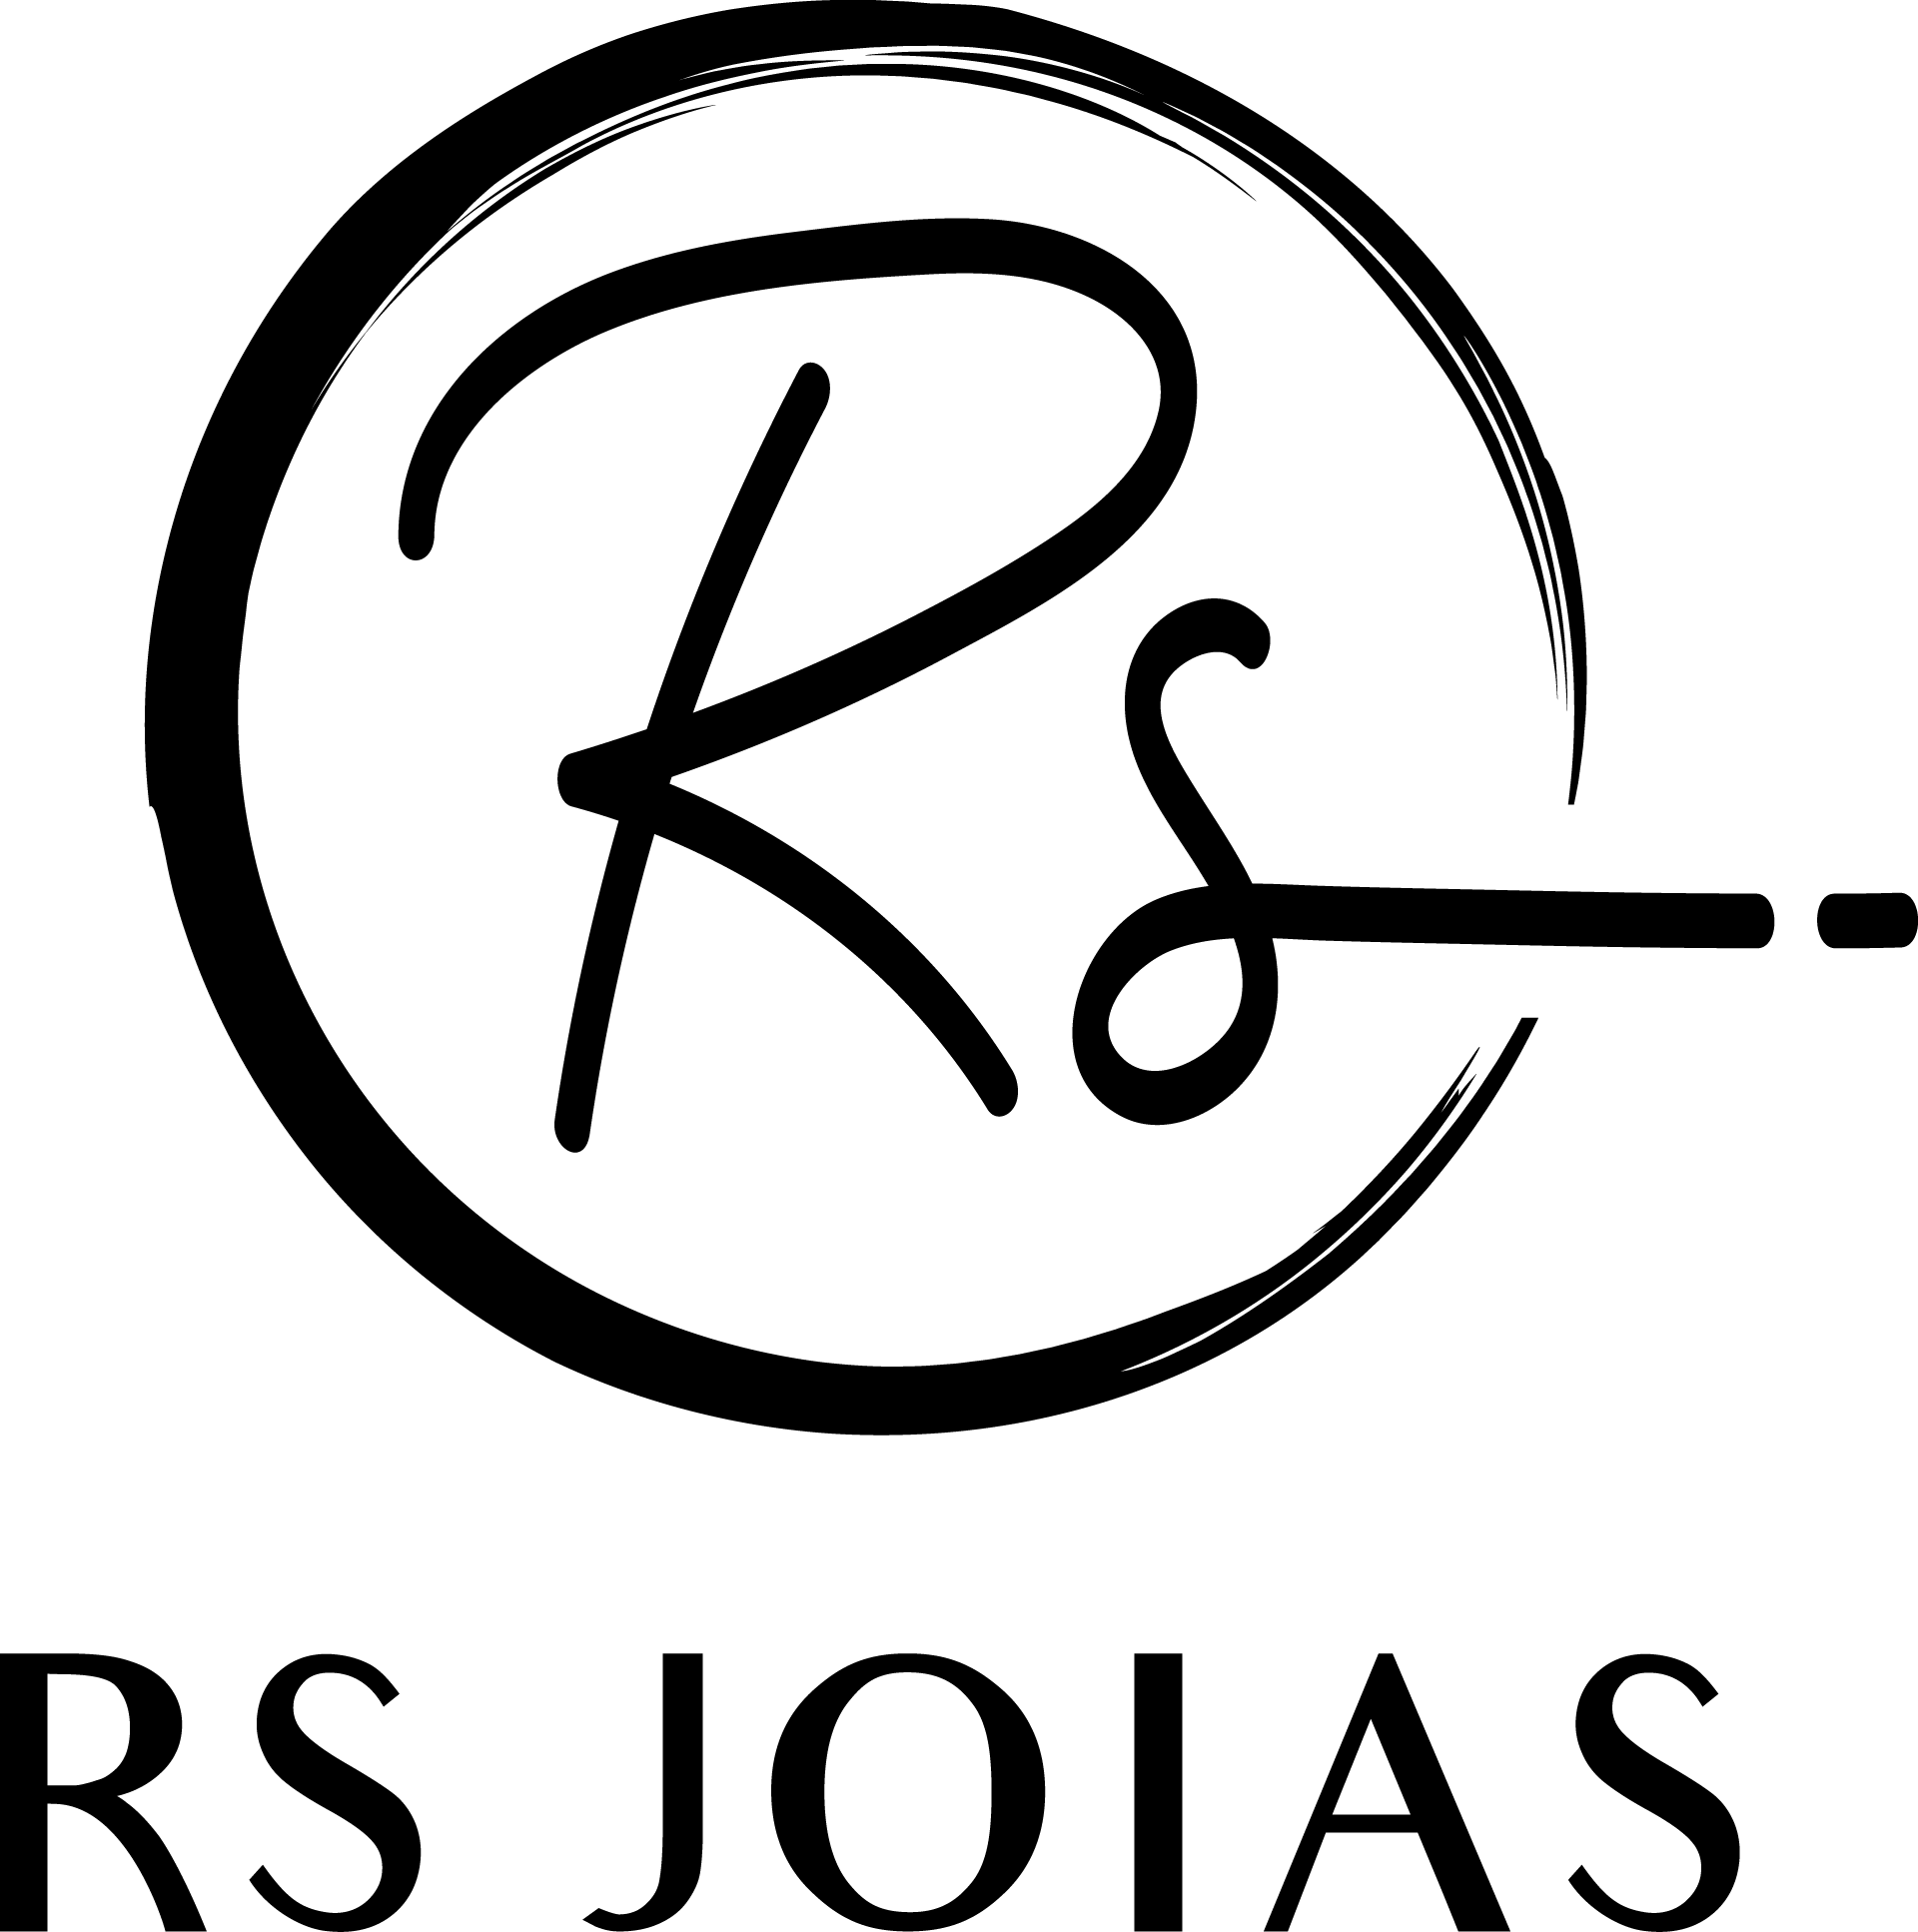 RS Joias by Keli Sordi